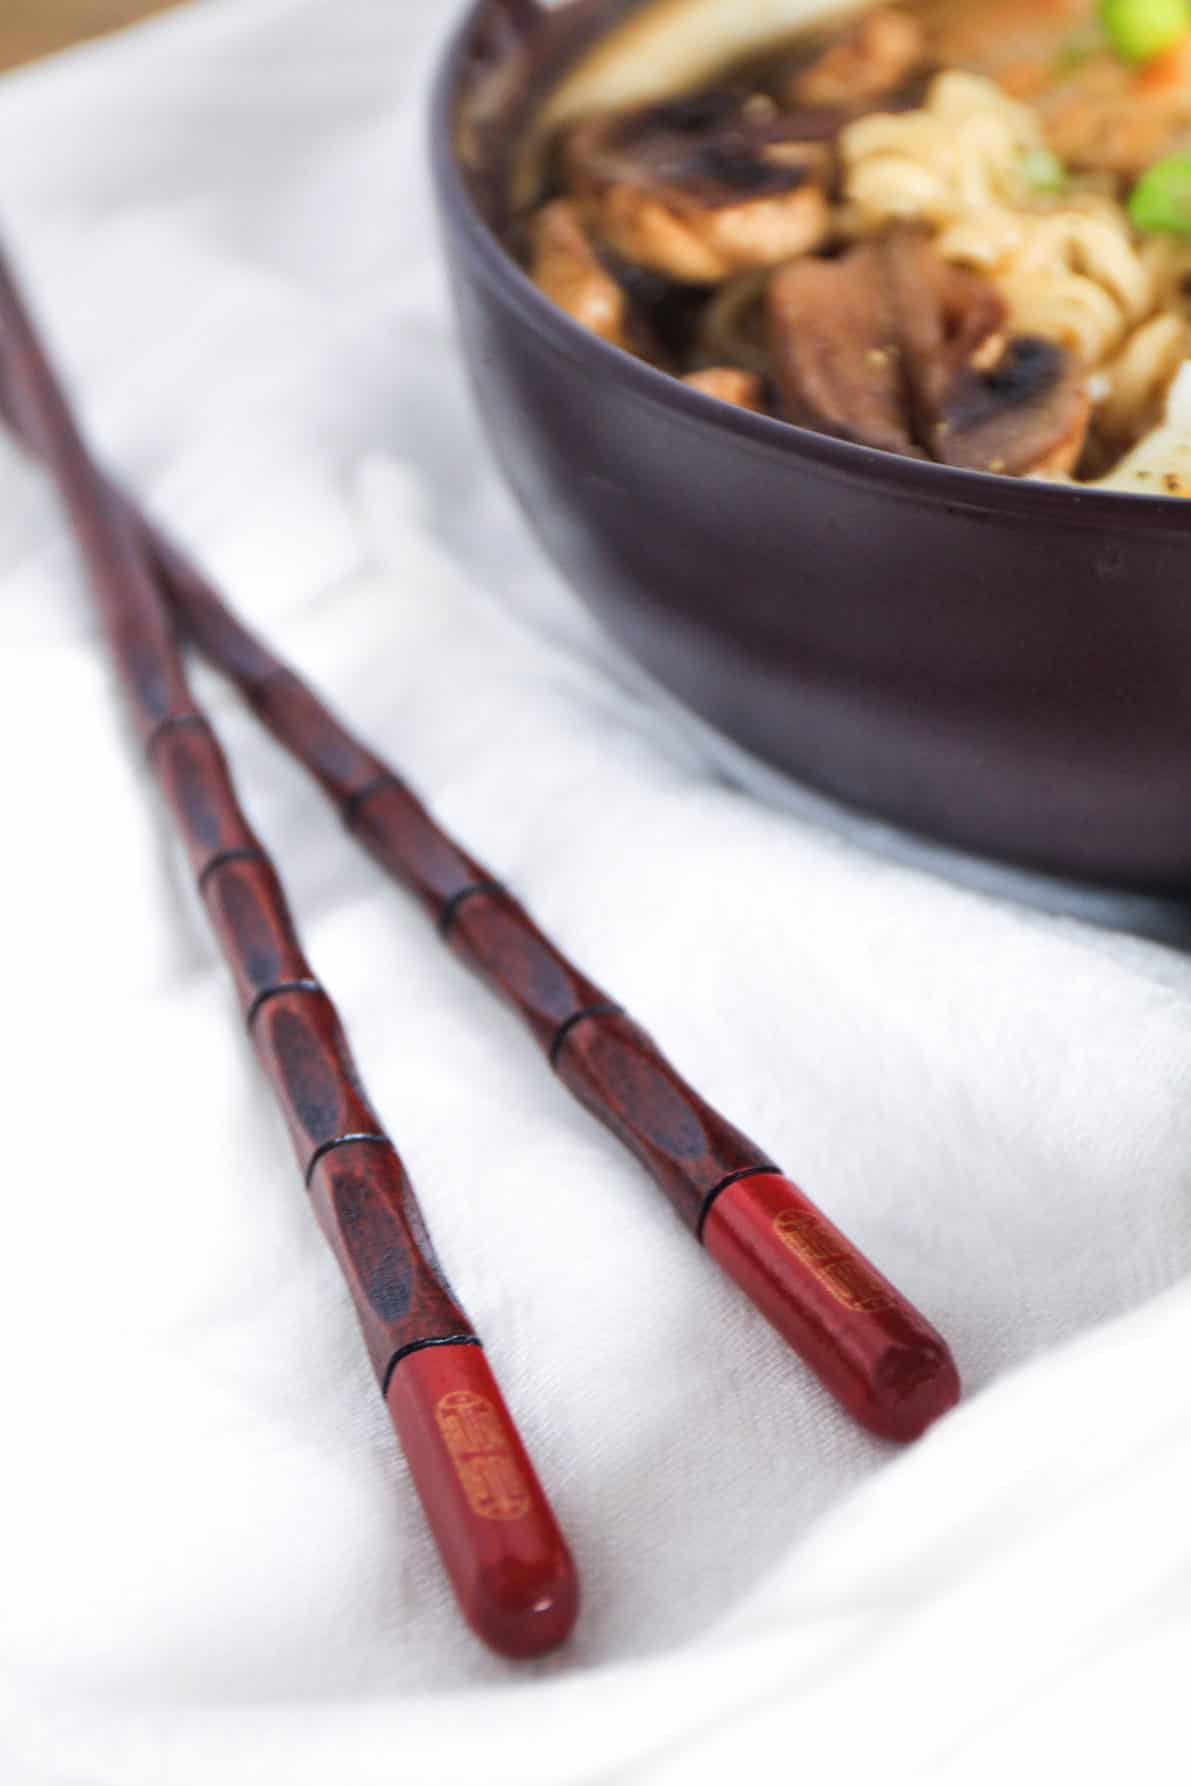 Beautiful Japanese chopsticks next to a bowl of Japanese ramen.